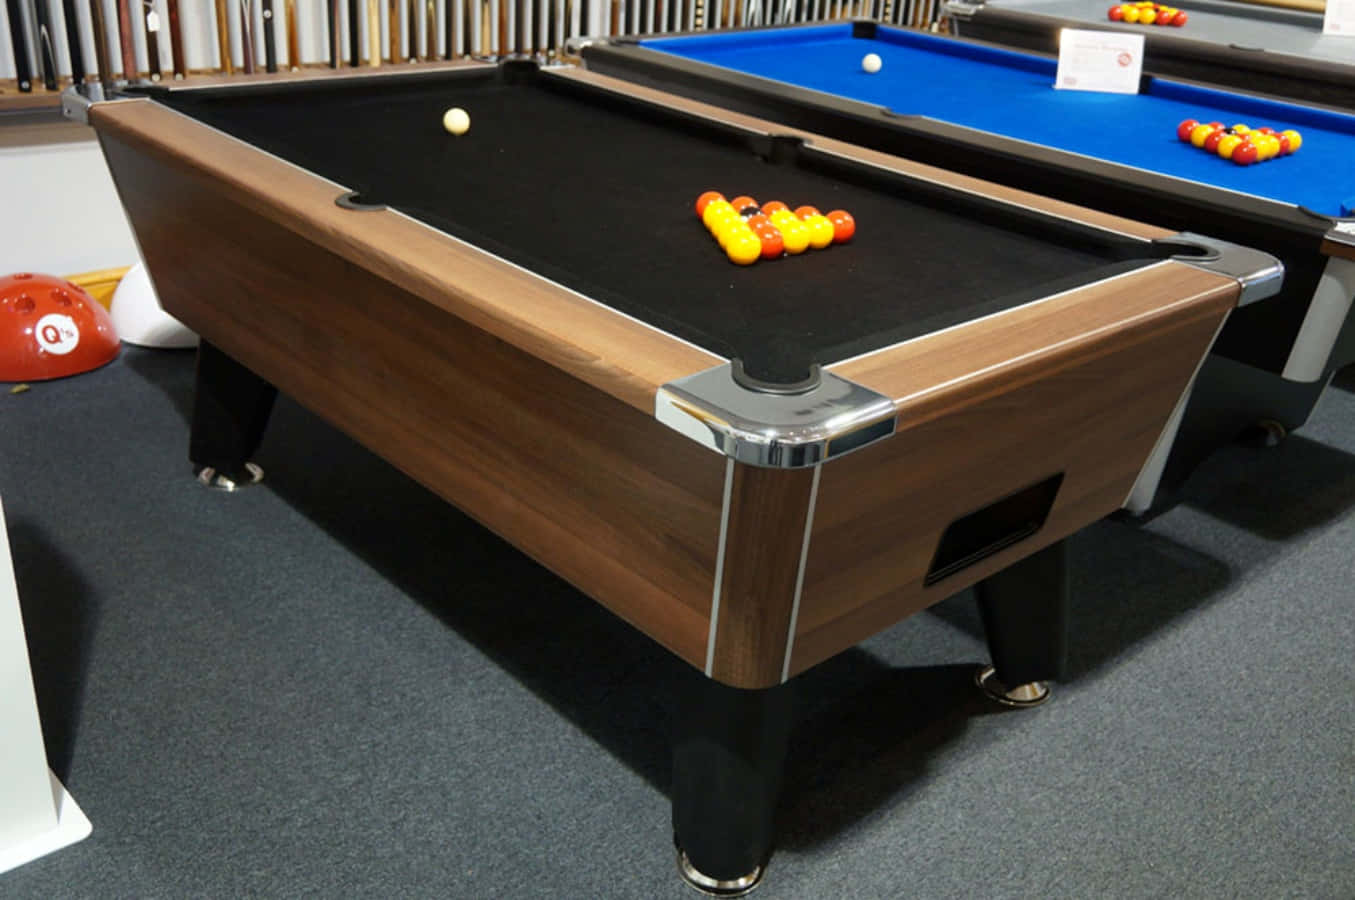 Enjoy a game of pool on a stylish billiard table